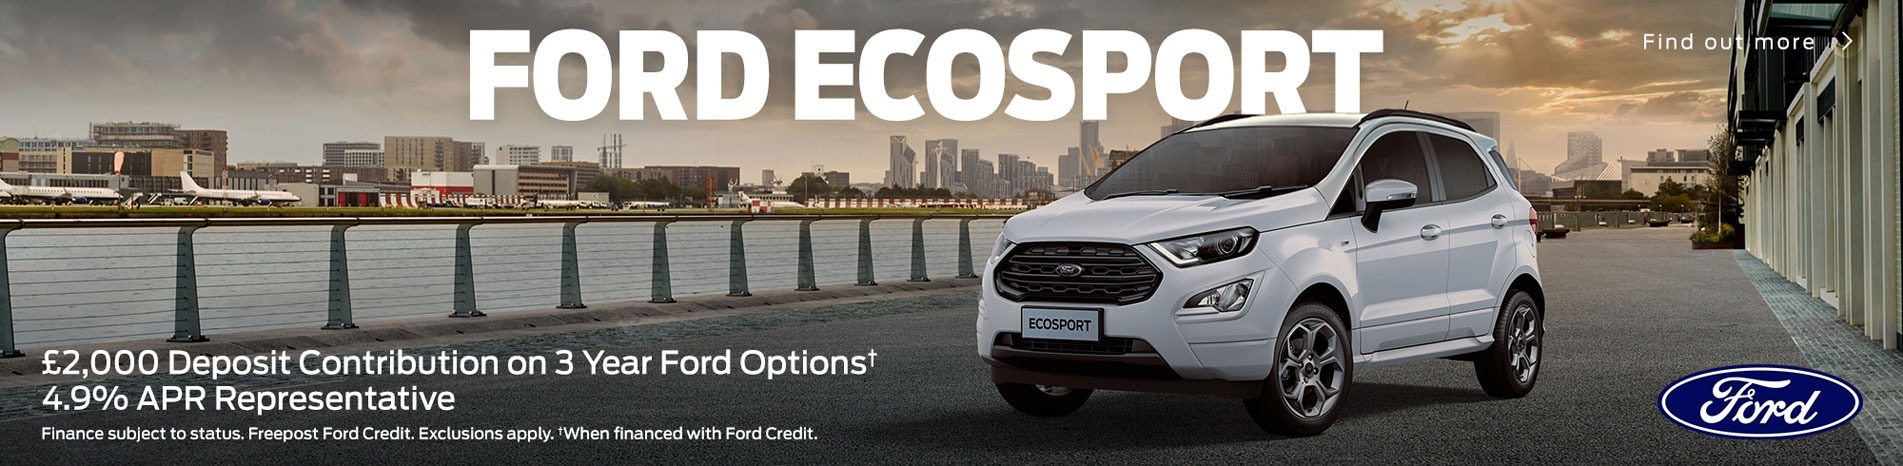 Ford EcoSport £2,000 Deposit Contribution